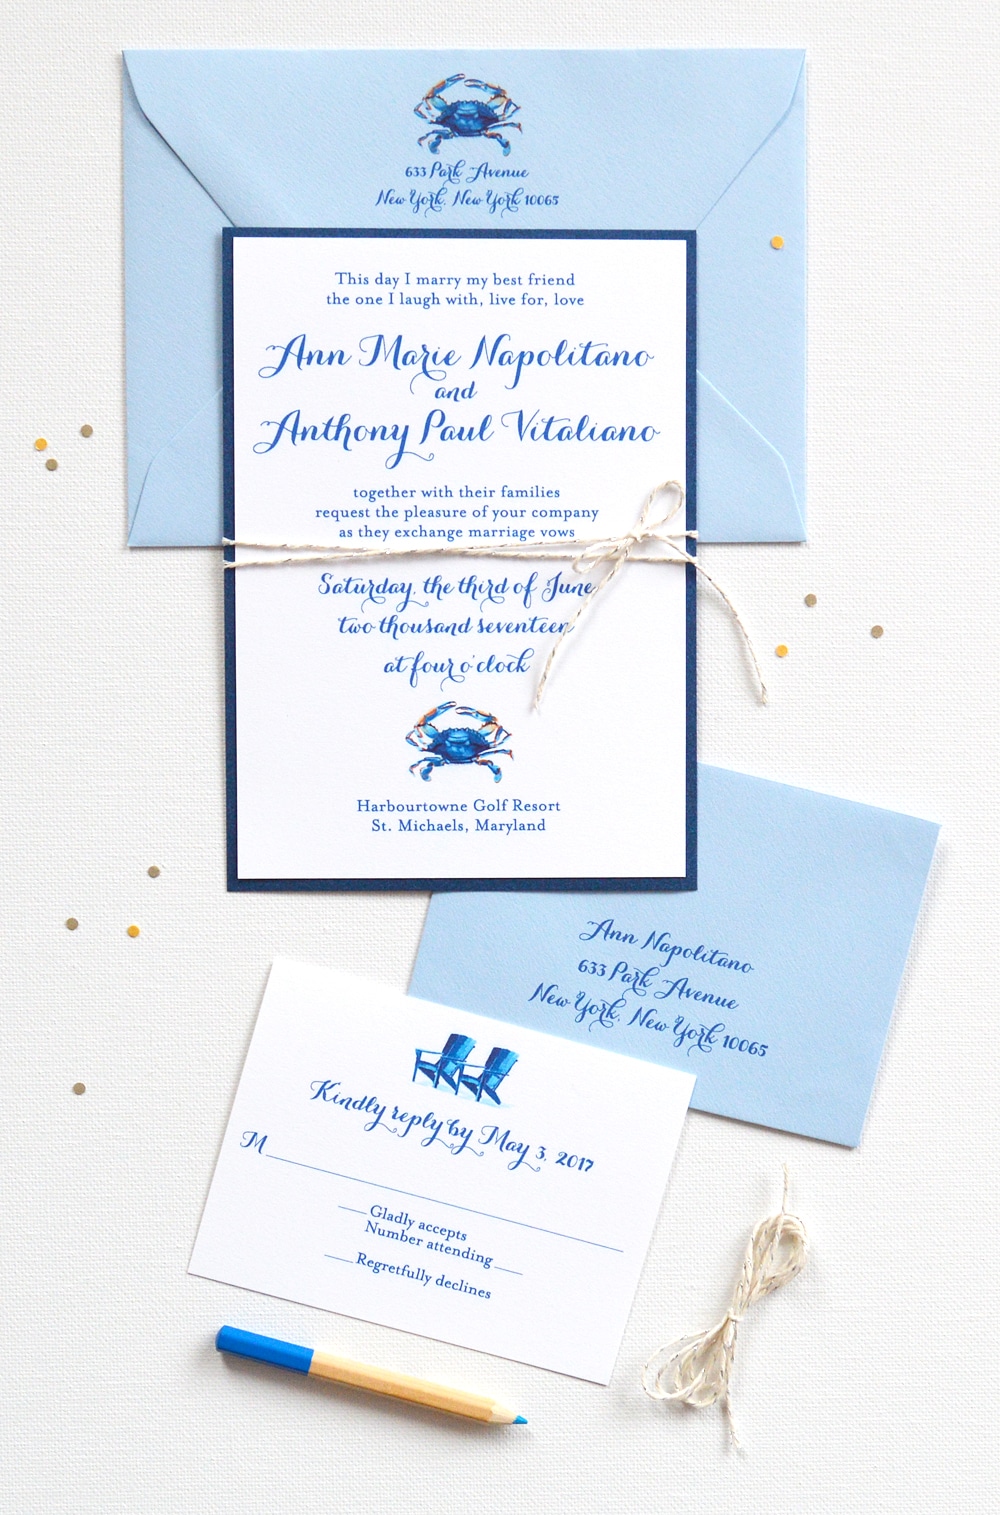 27 Sea-worthy Nautical Wedding Invitations. Watercolor blue crab nautical layered handmade wedding invitations by artist Michelle Mospens. | Mospens Studio